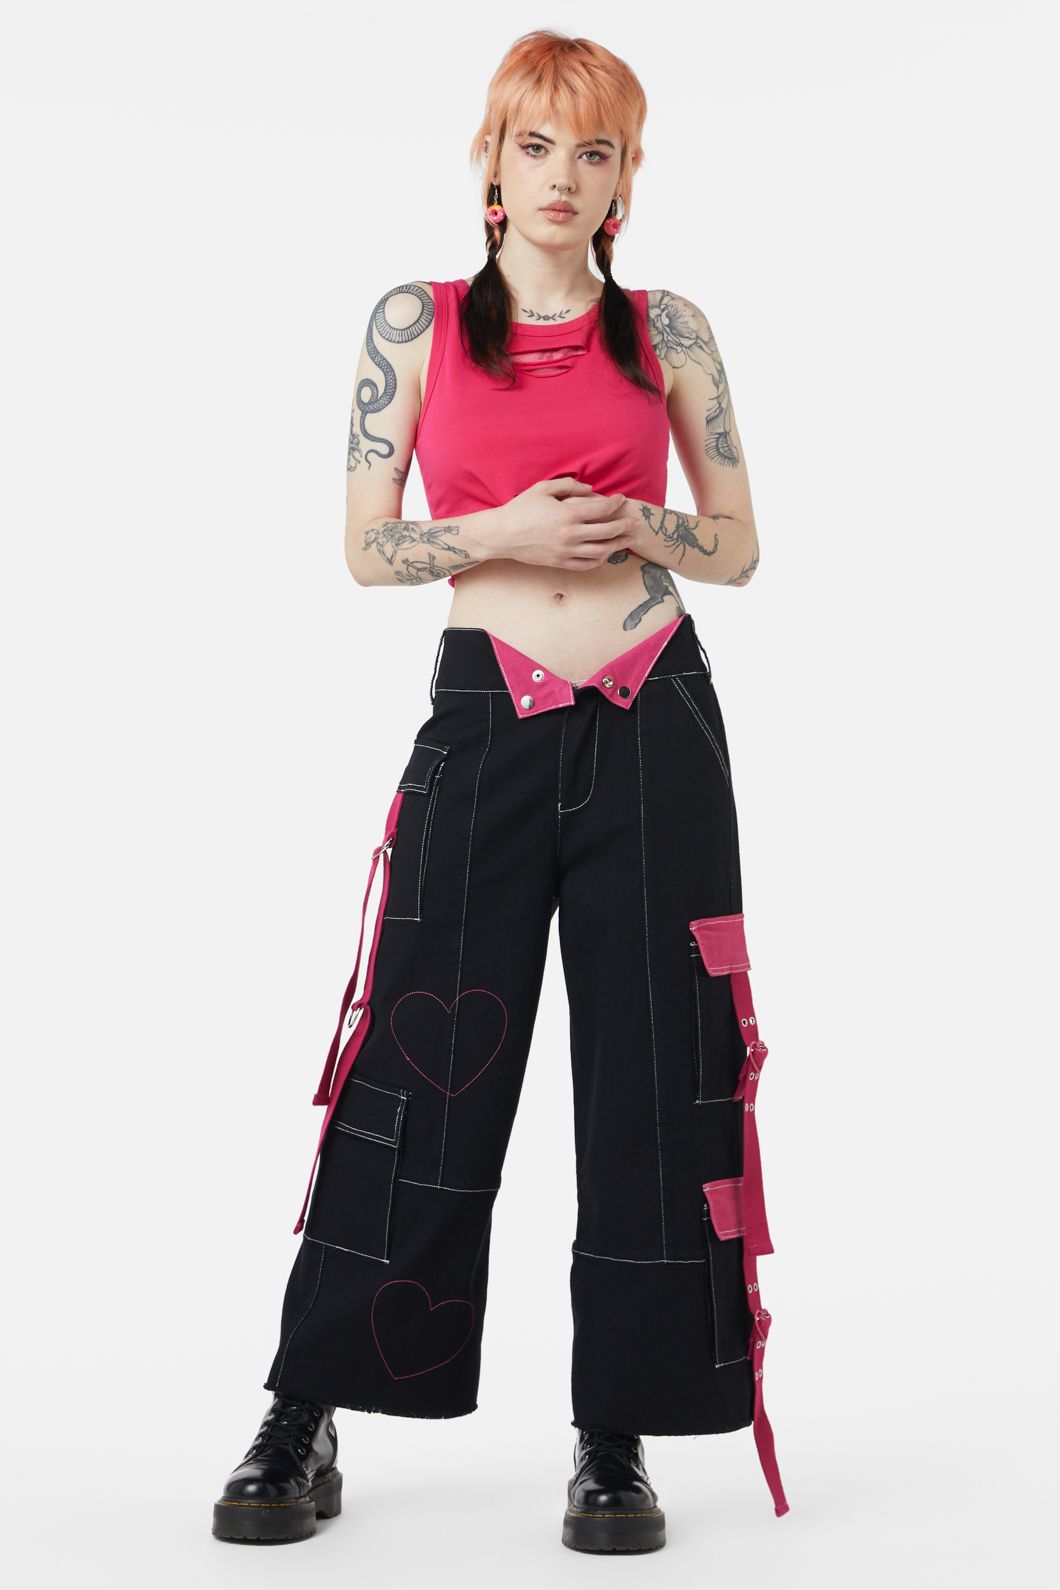 Gothic Baggy Bondage Alt Pant Red Threads Cargo Trouser Trans Shorts